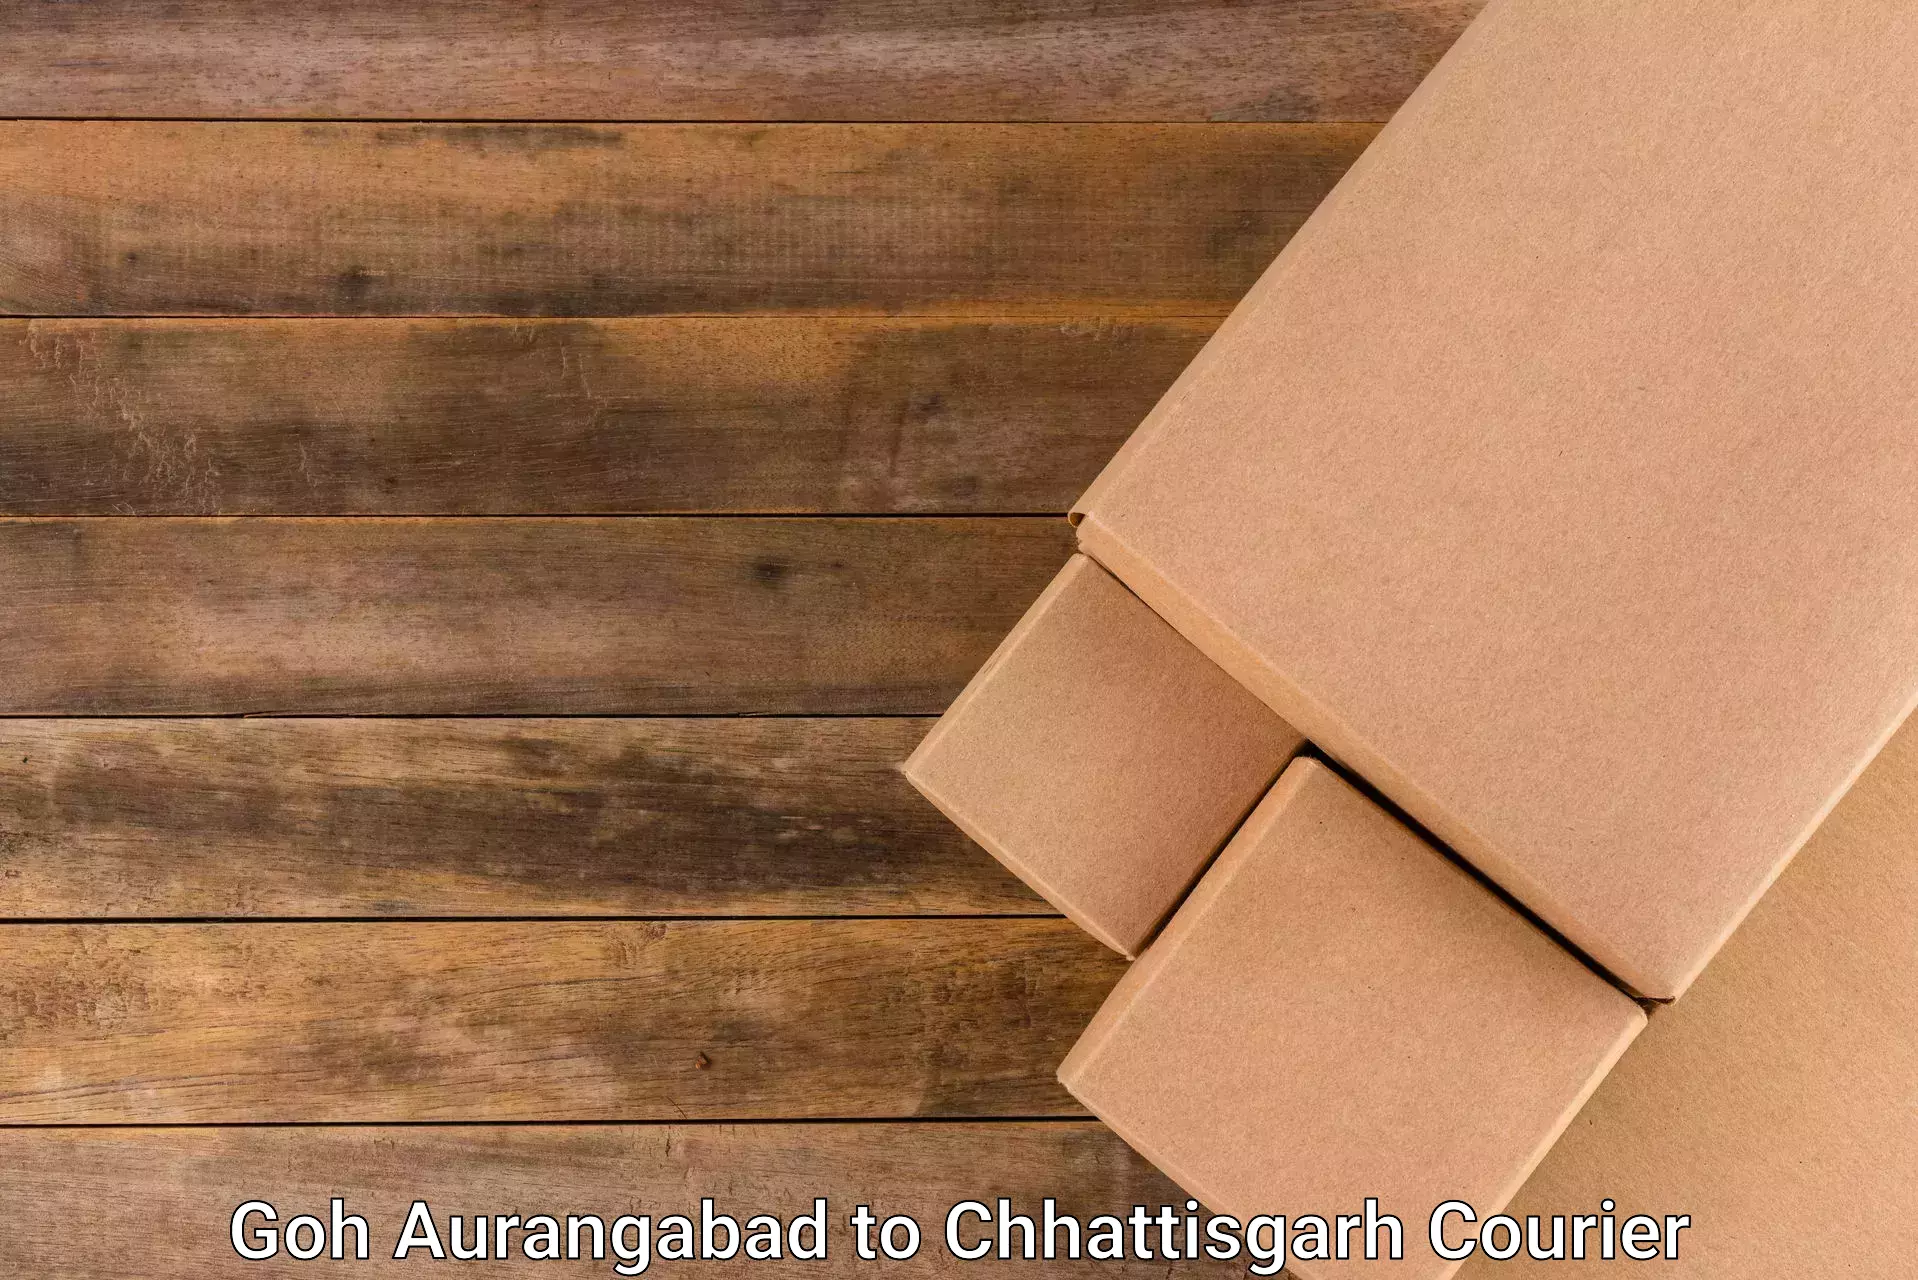 Courier service comparison Goh Aurangabad to Bhatapara